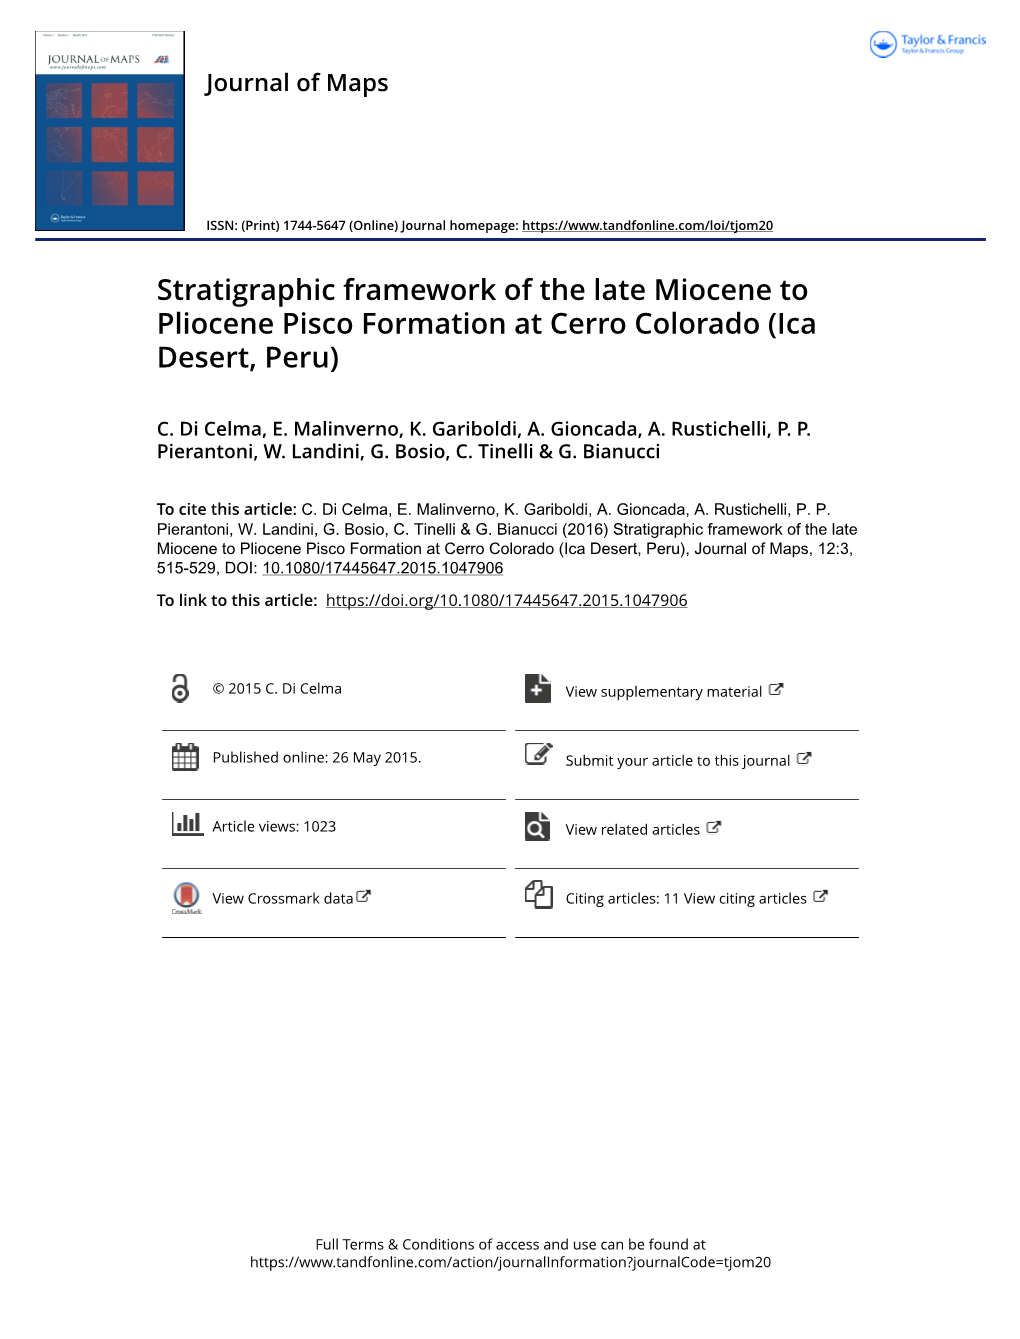 Stratigraphic Framework of the Late Miocene to Pliocene Pisco Formation at Cerro Colorado (Ica Desert, Peru)